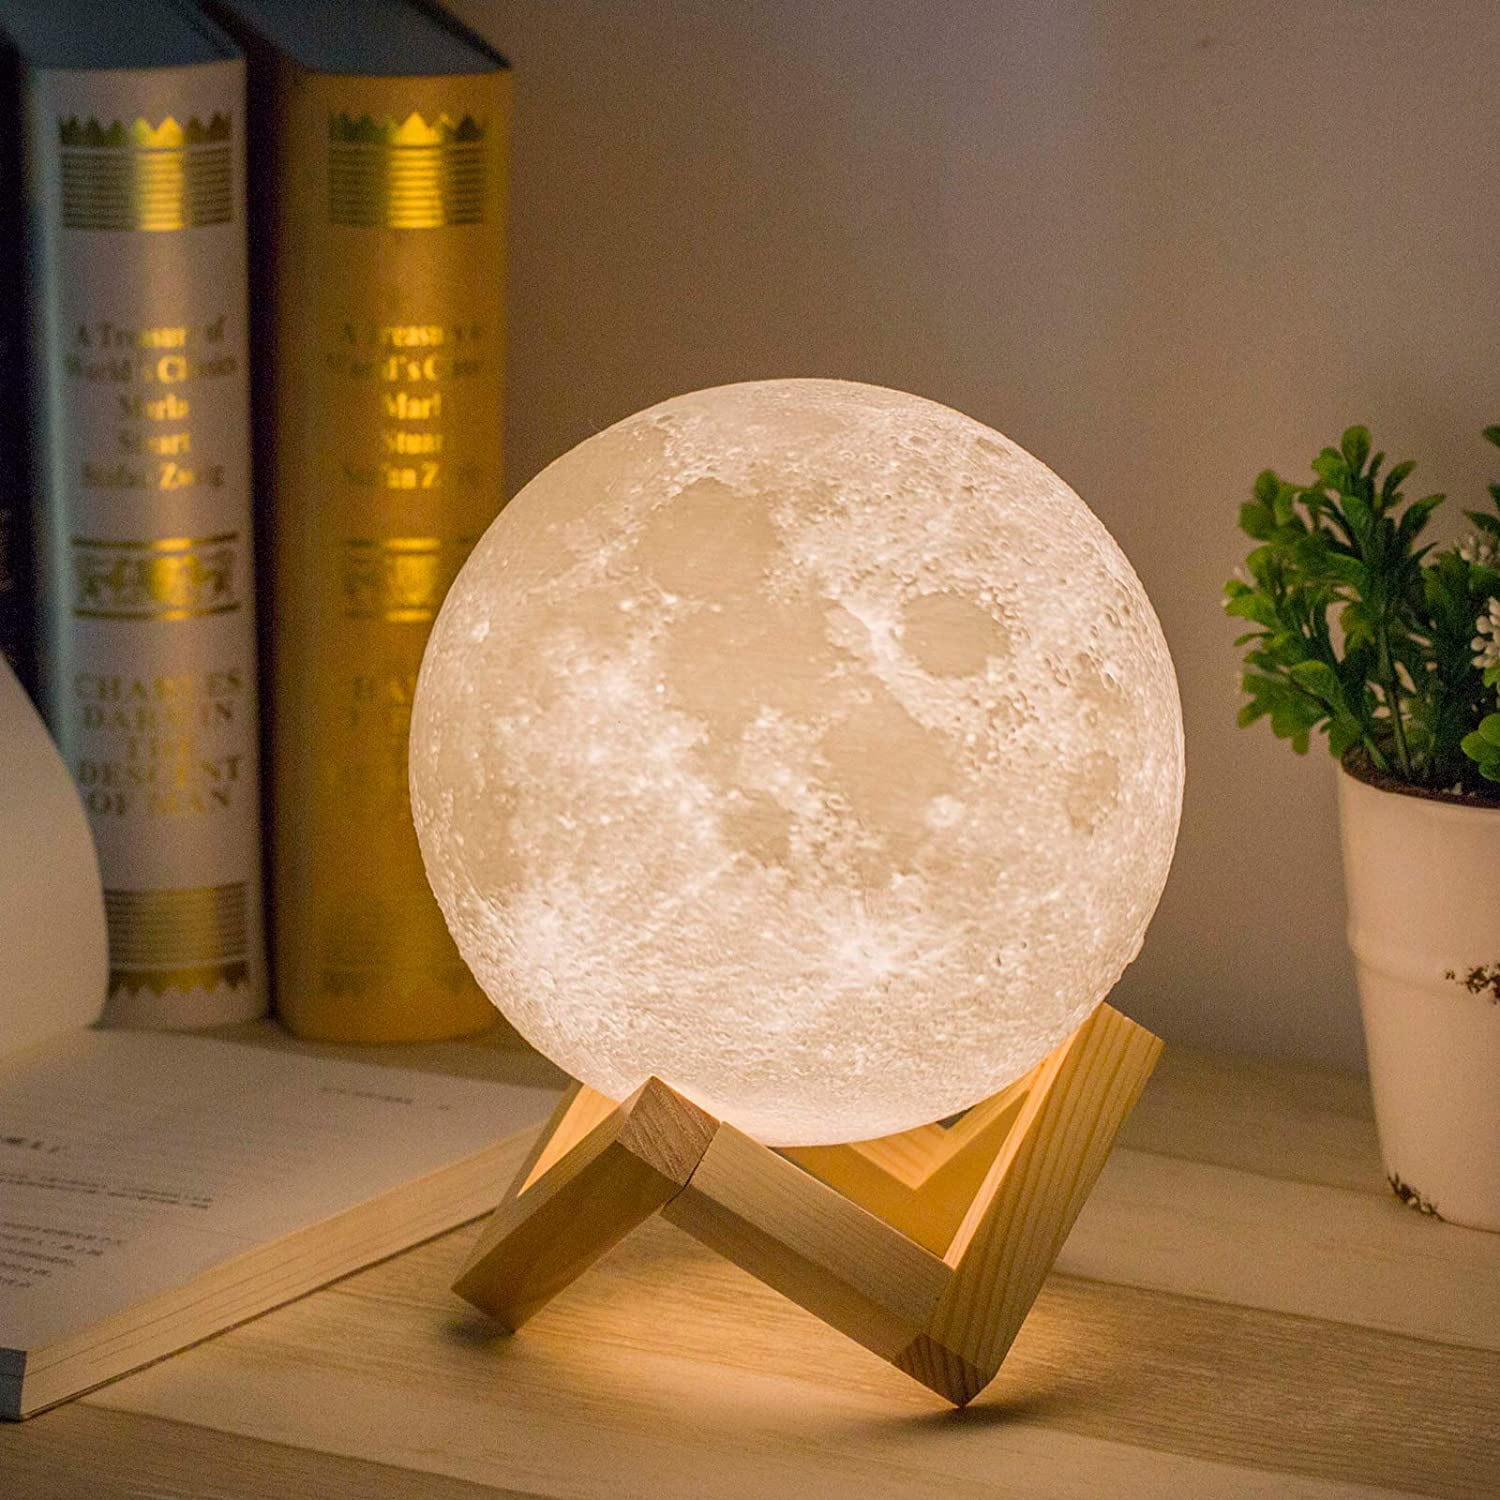 Moonlight Table Desk Moon Lamp Decor 3D USB LED Magical Moon Night Light 